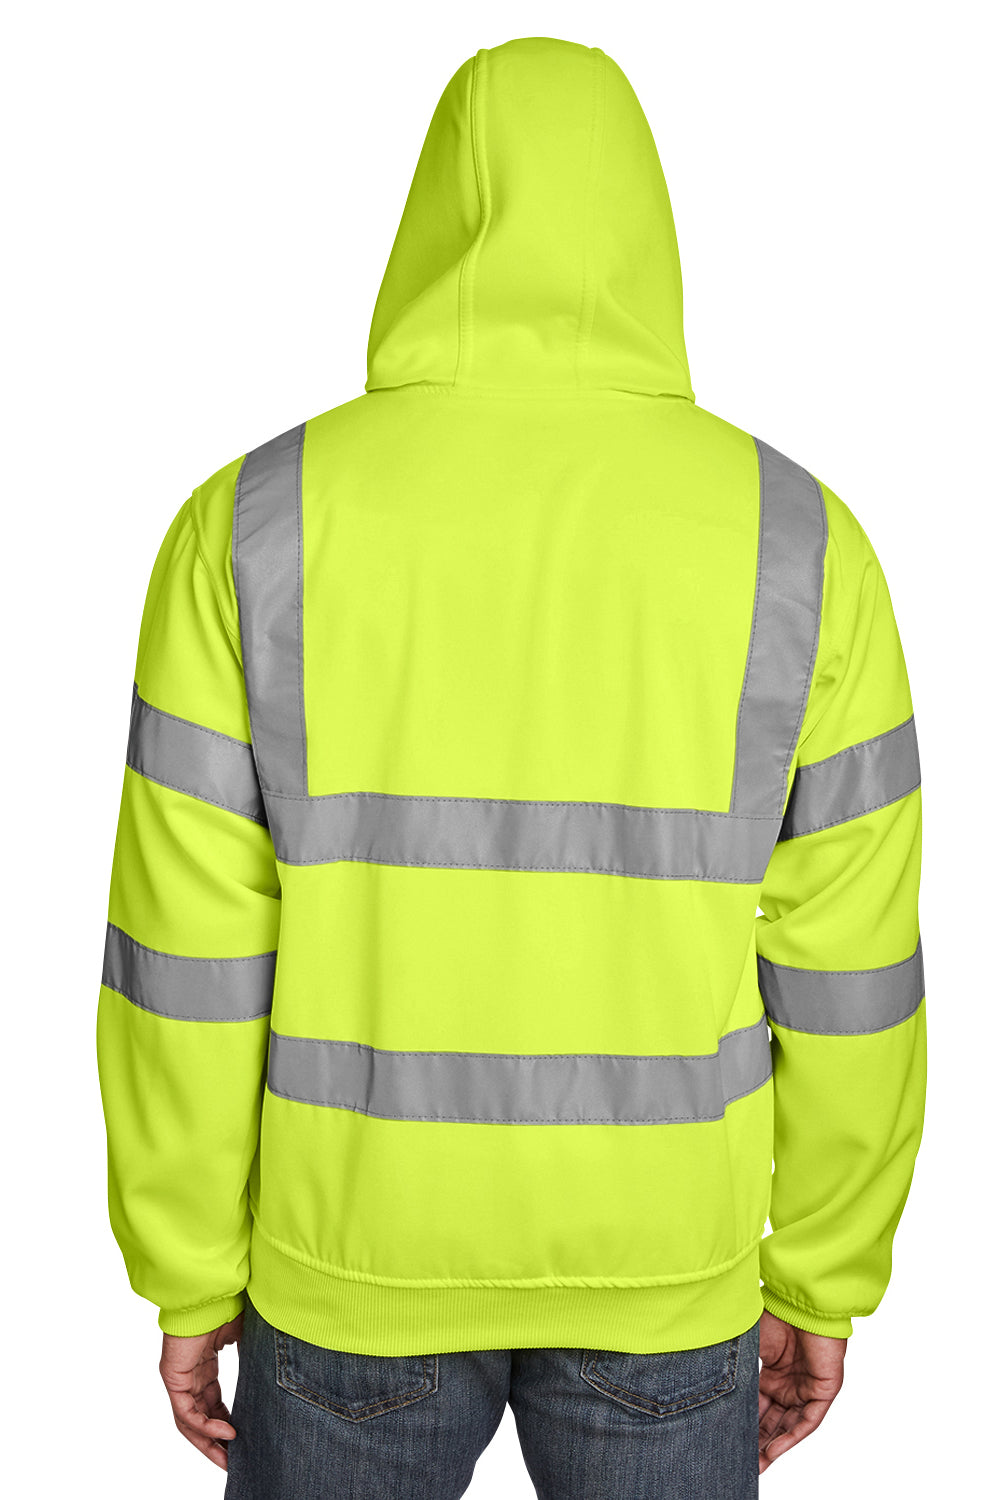 Berne HVF021 Mens High Visability Fleece Full Zip Hooded Sweatshirt Hoodie Safety Yellow Model Back